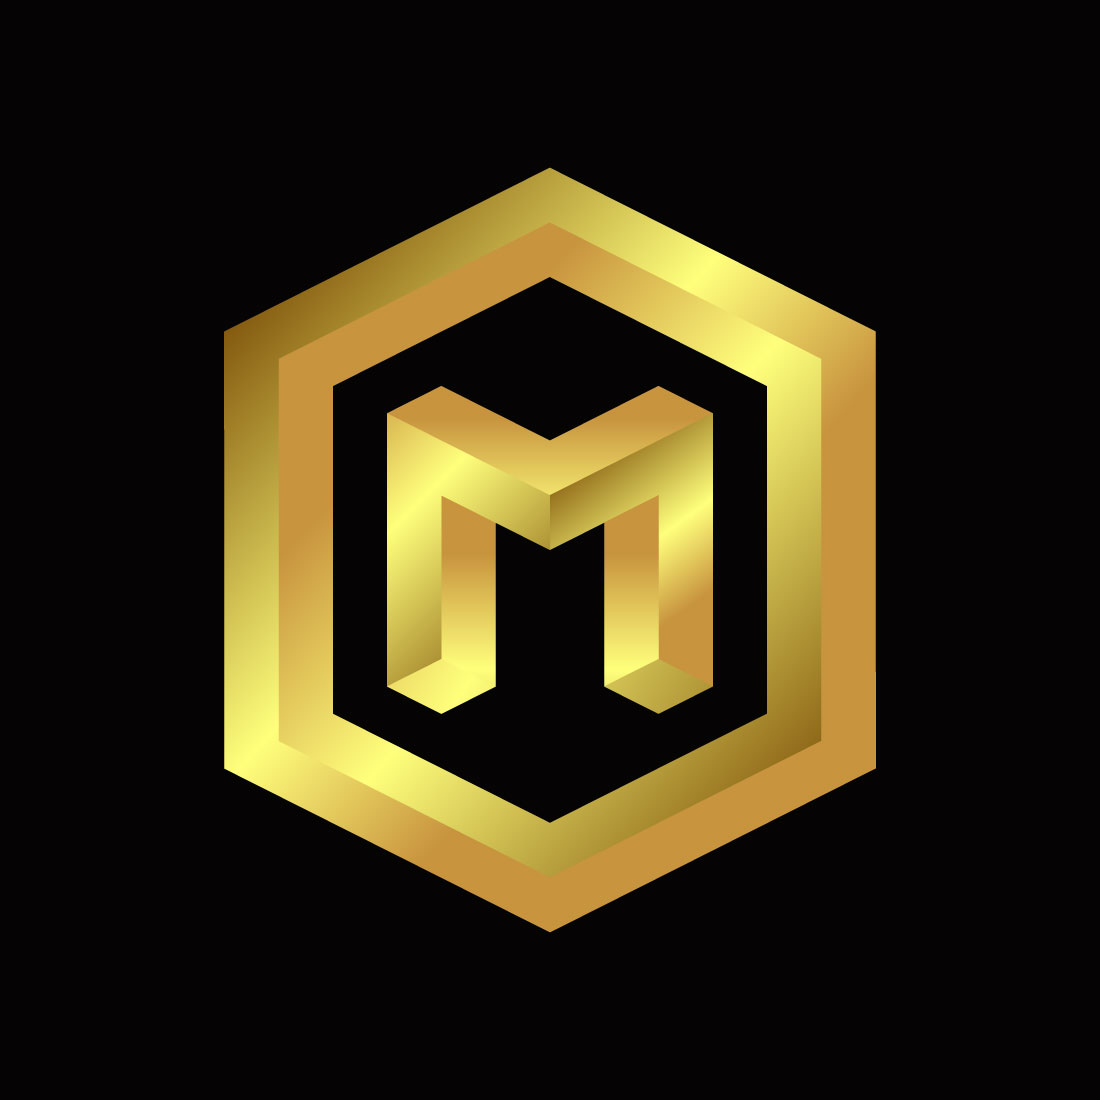 M Letter Logo Gold cover image.